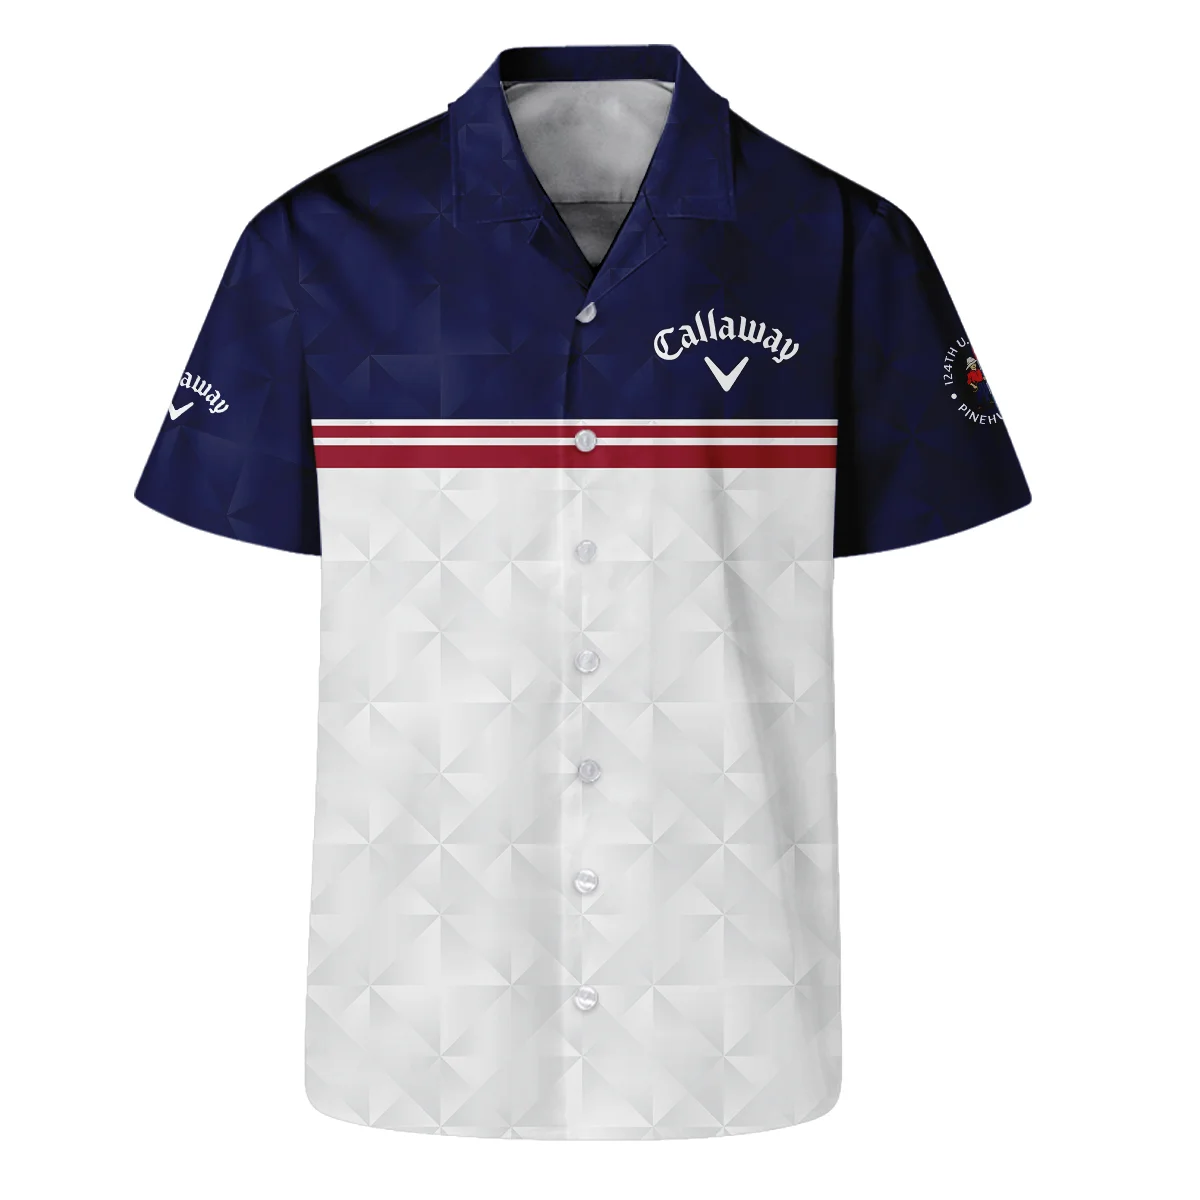 Golf Sport 124th U.S. Open Pinehurst Callaway Zipper Hoodie Shirt Dark Blue White Abstract Geometric Triangles All Over Print Zipper Hoodie Shirt